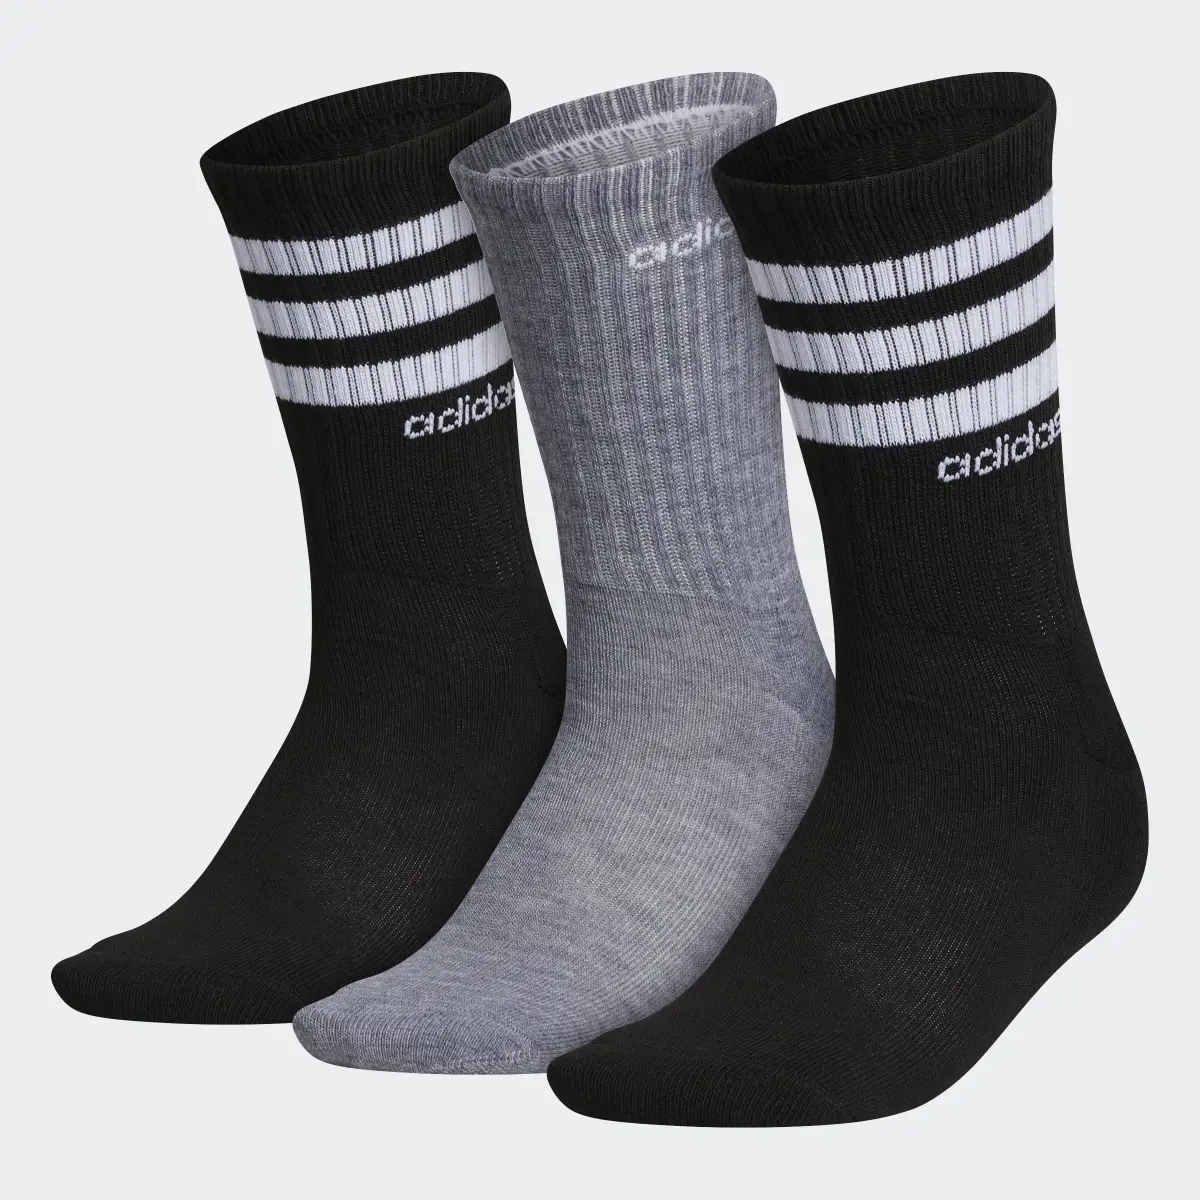 Adidas 3-Stripes Crew Socks 3 Pairs. 2